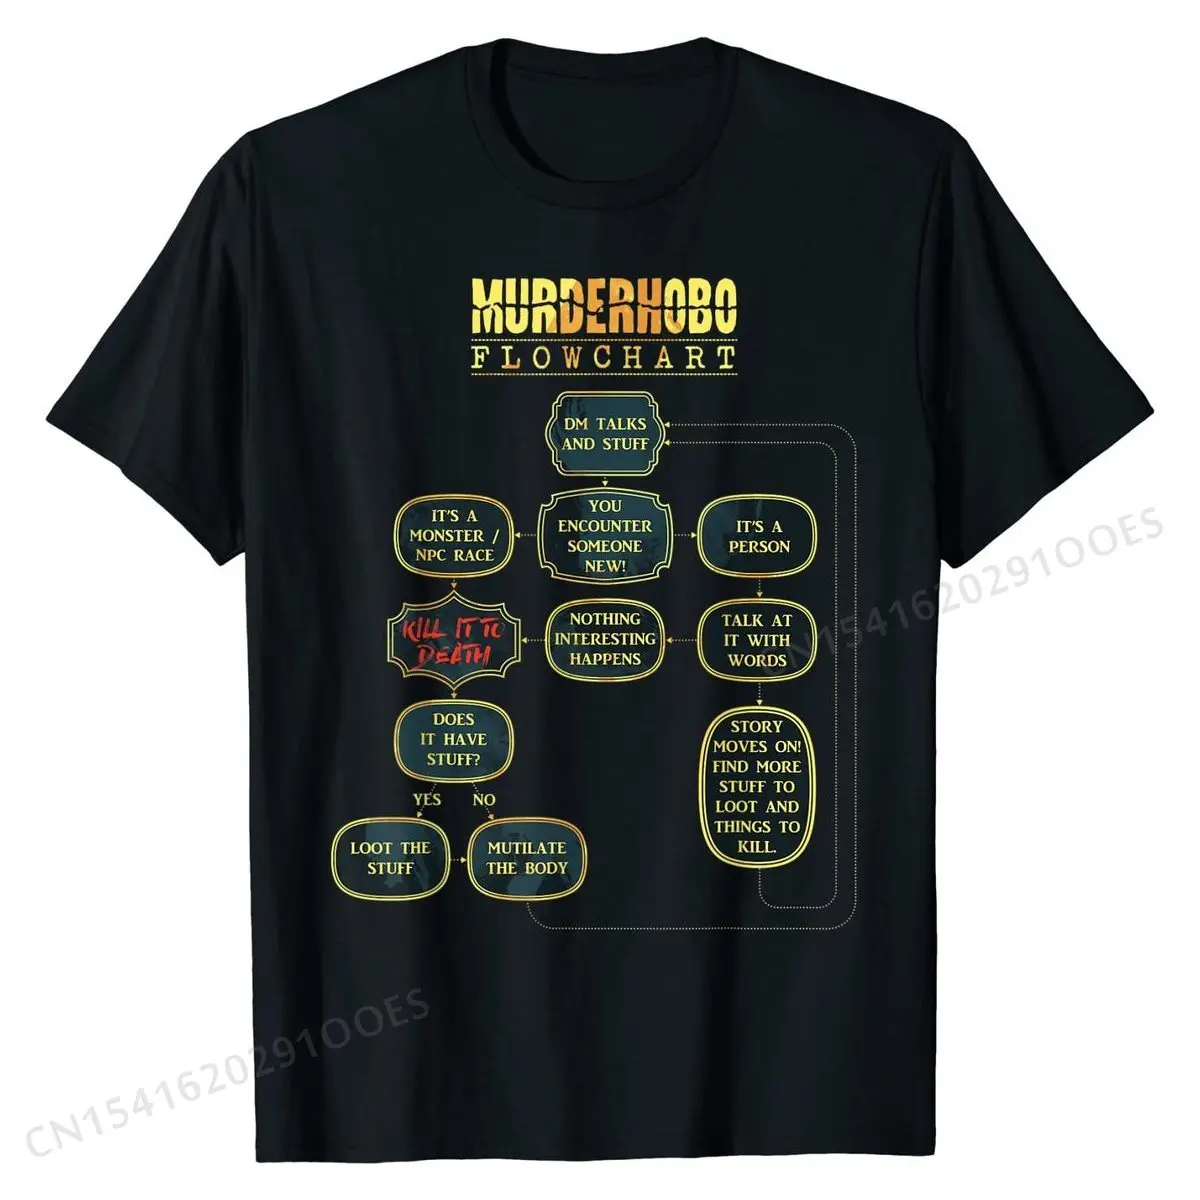 Murder Hobo Flowchart D20 Tabletop RPG Dragons Meme T-Shirt T-Shirt Cotton Tops & Tees Normal Popular Casual T Shirt